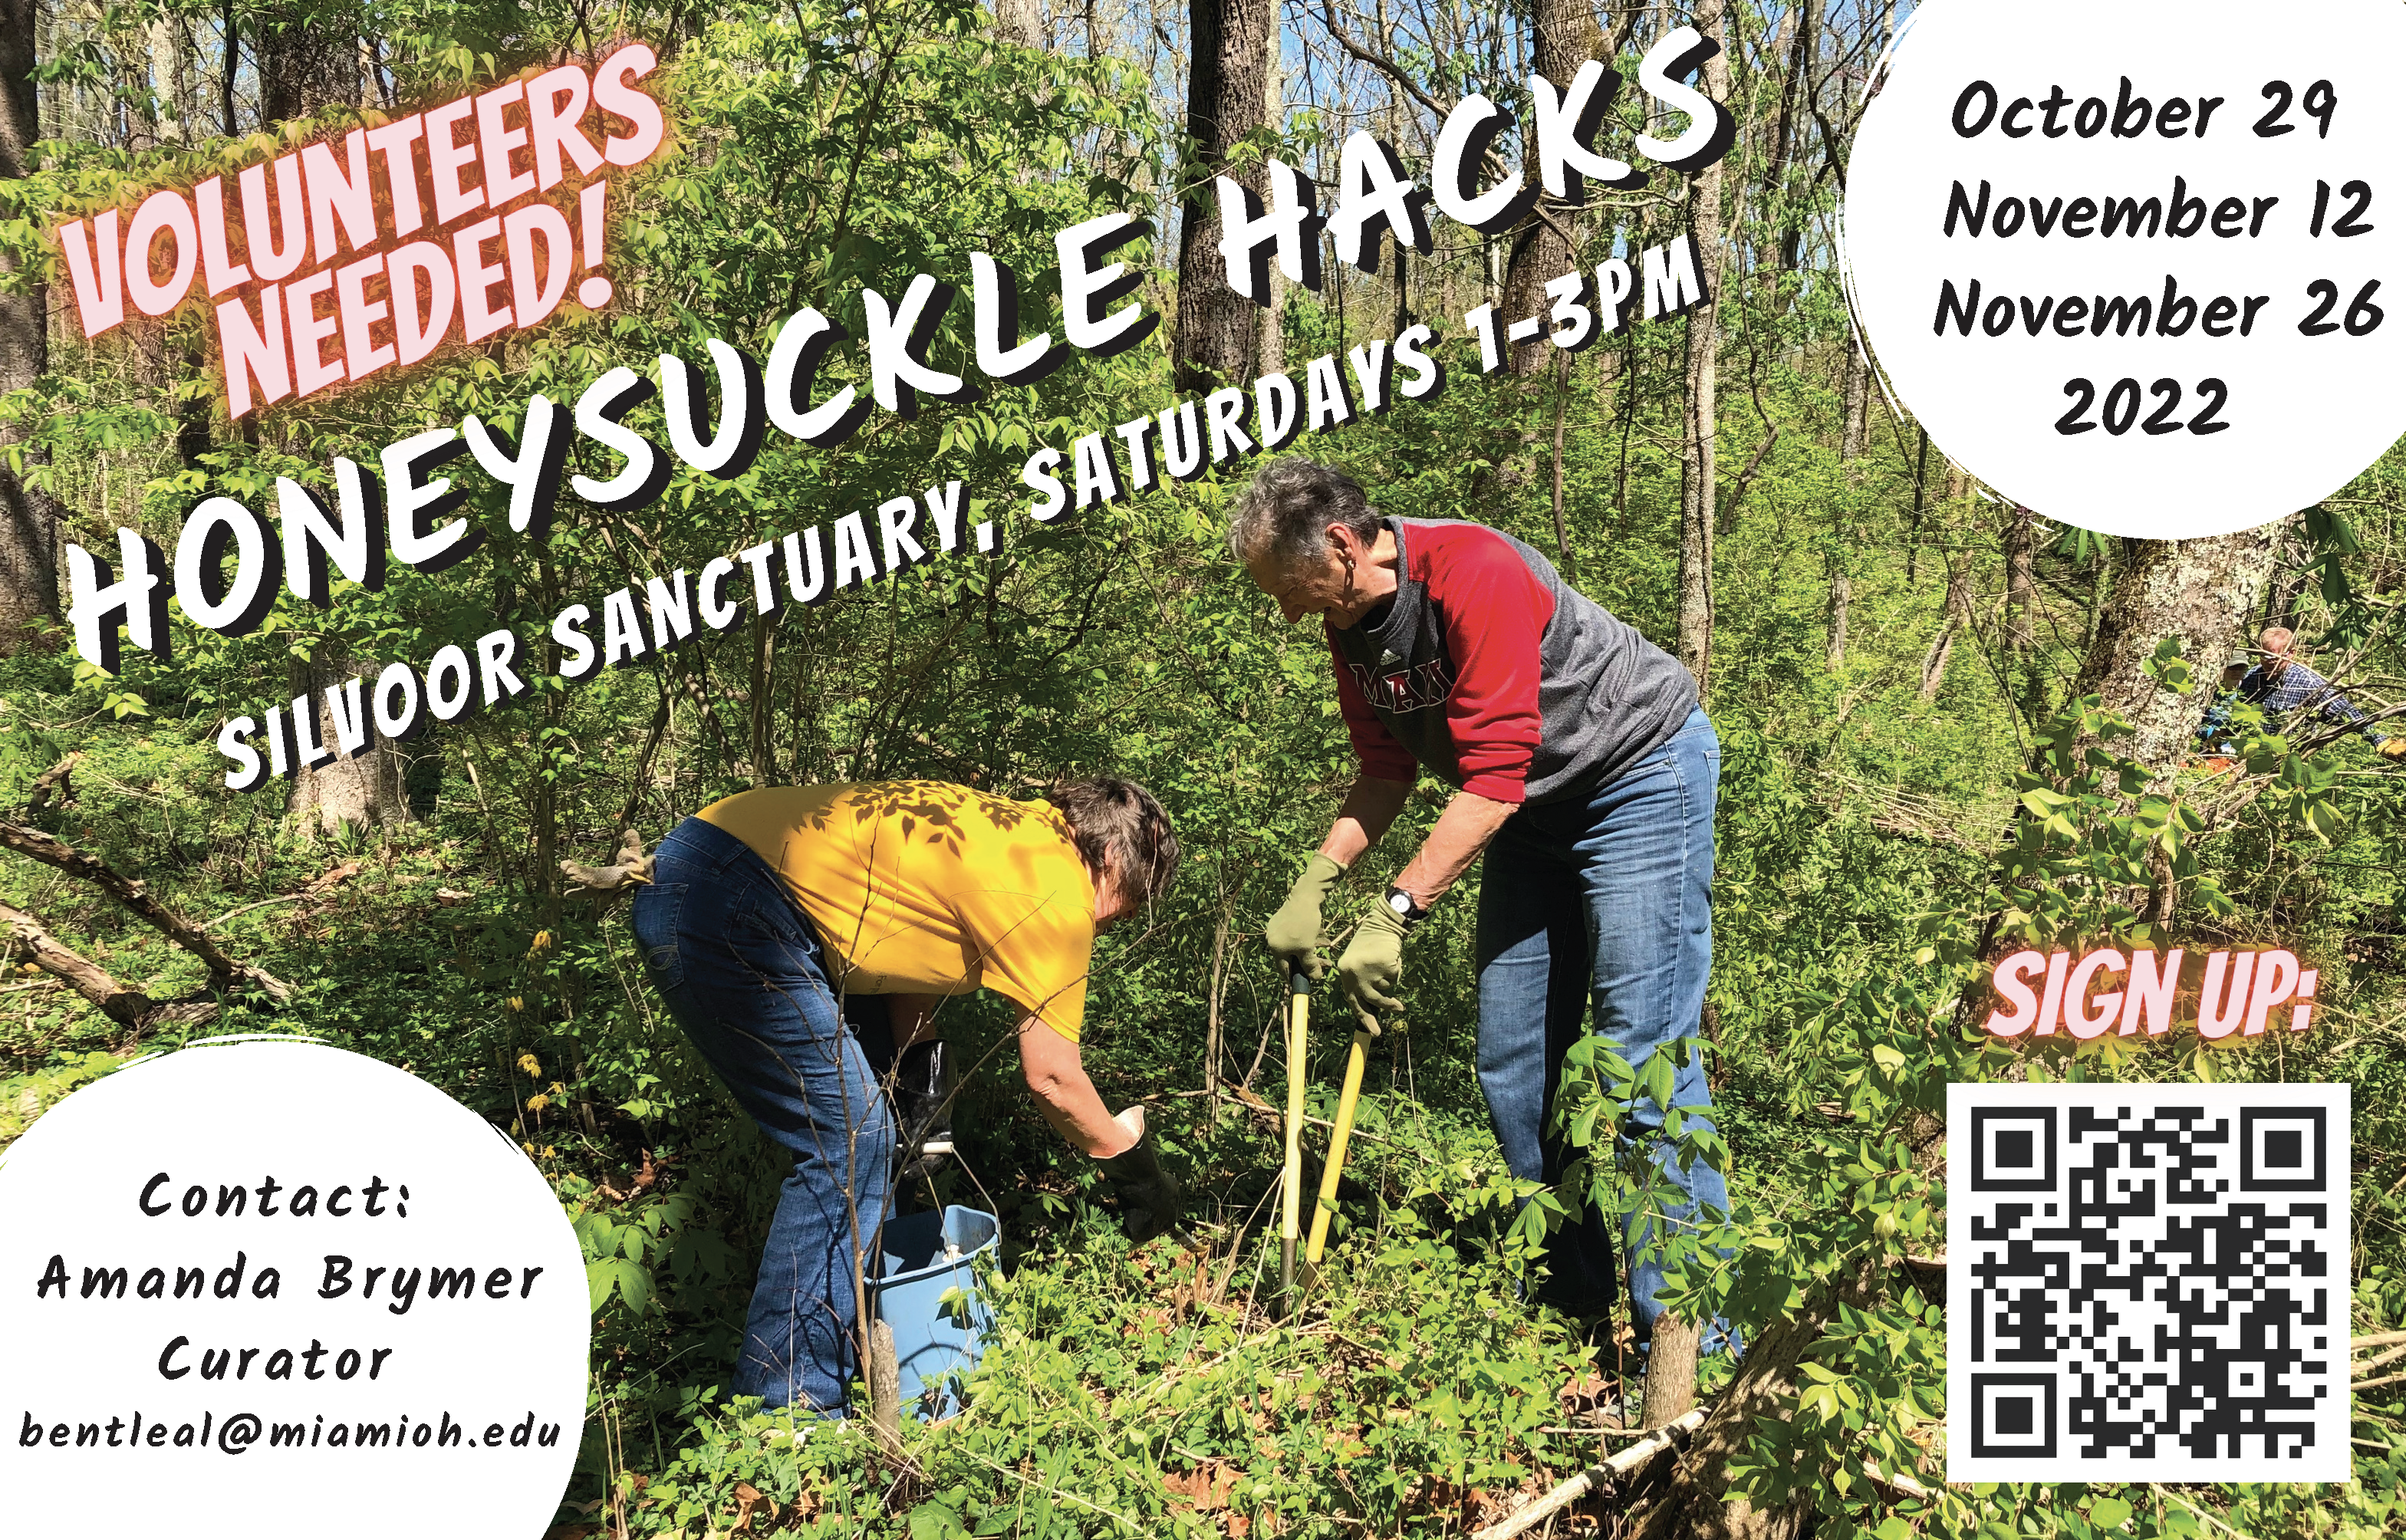 Honeysuckle Hacks. Volunteers Needed. Oxtober 29, November 12, 26, 2022, 1-3 p.m. Silvoor Sanctuary.